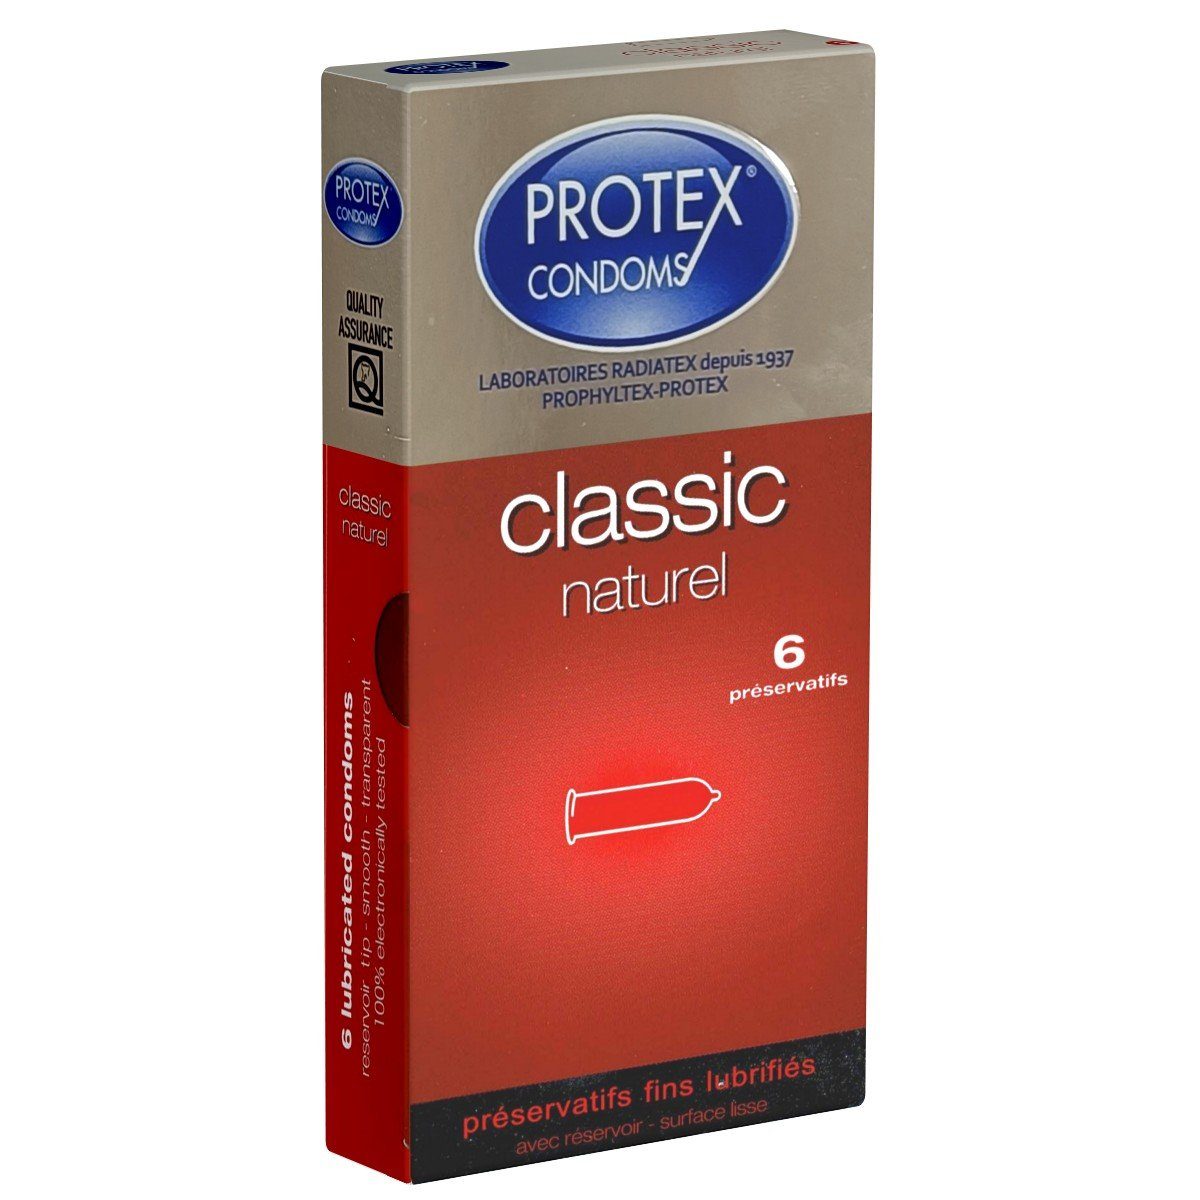 aus Frankreich Kondome 6 CLASSIC Naturel Kondome mit, Protex Packung St., klassische